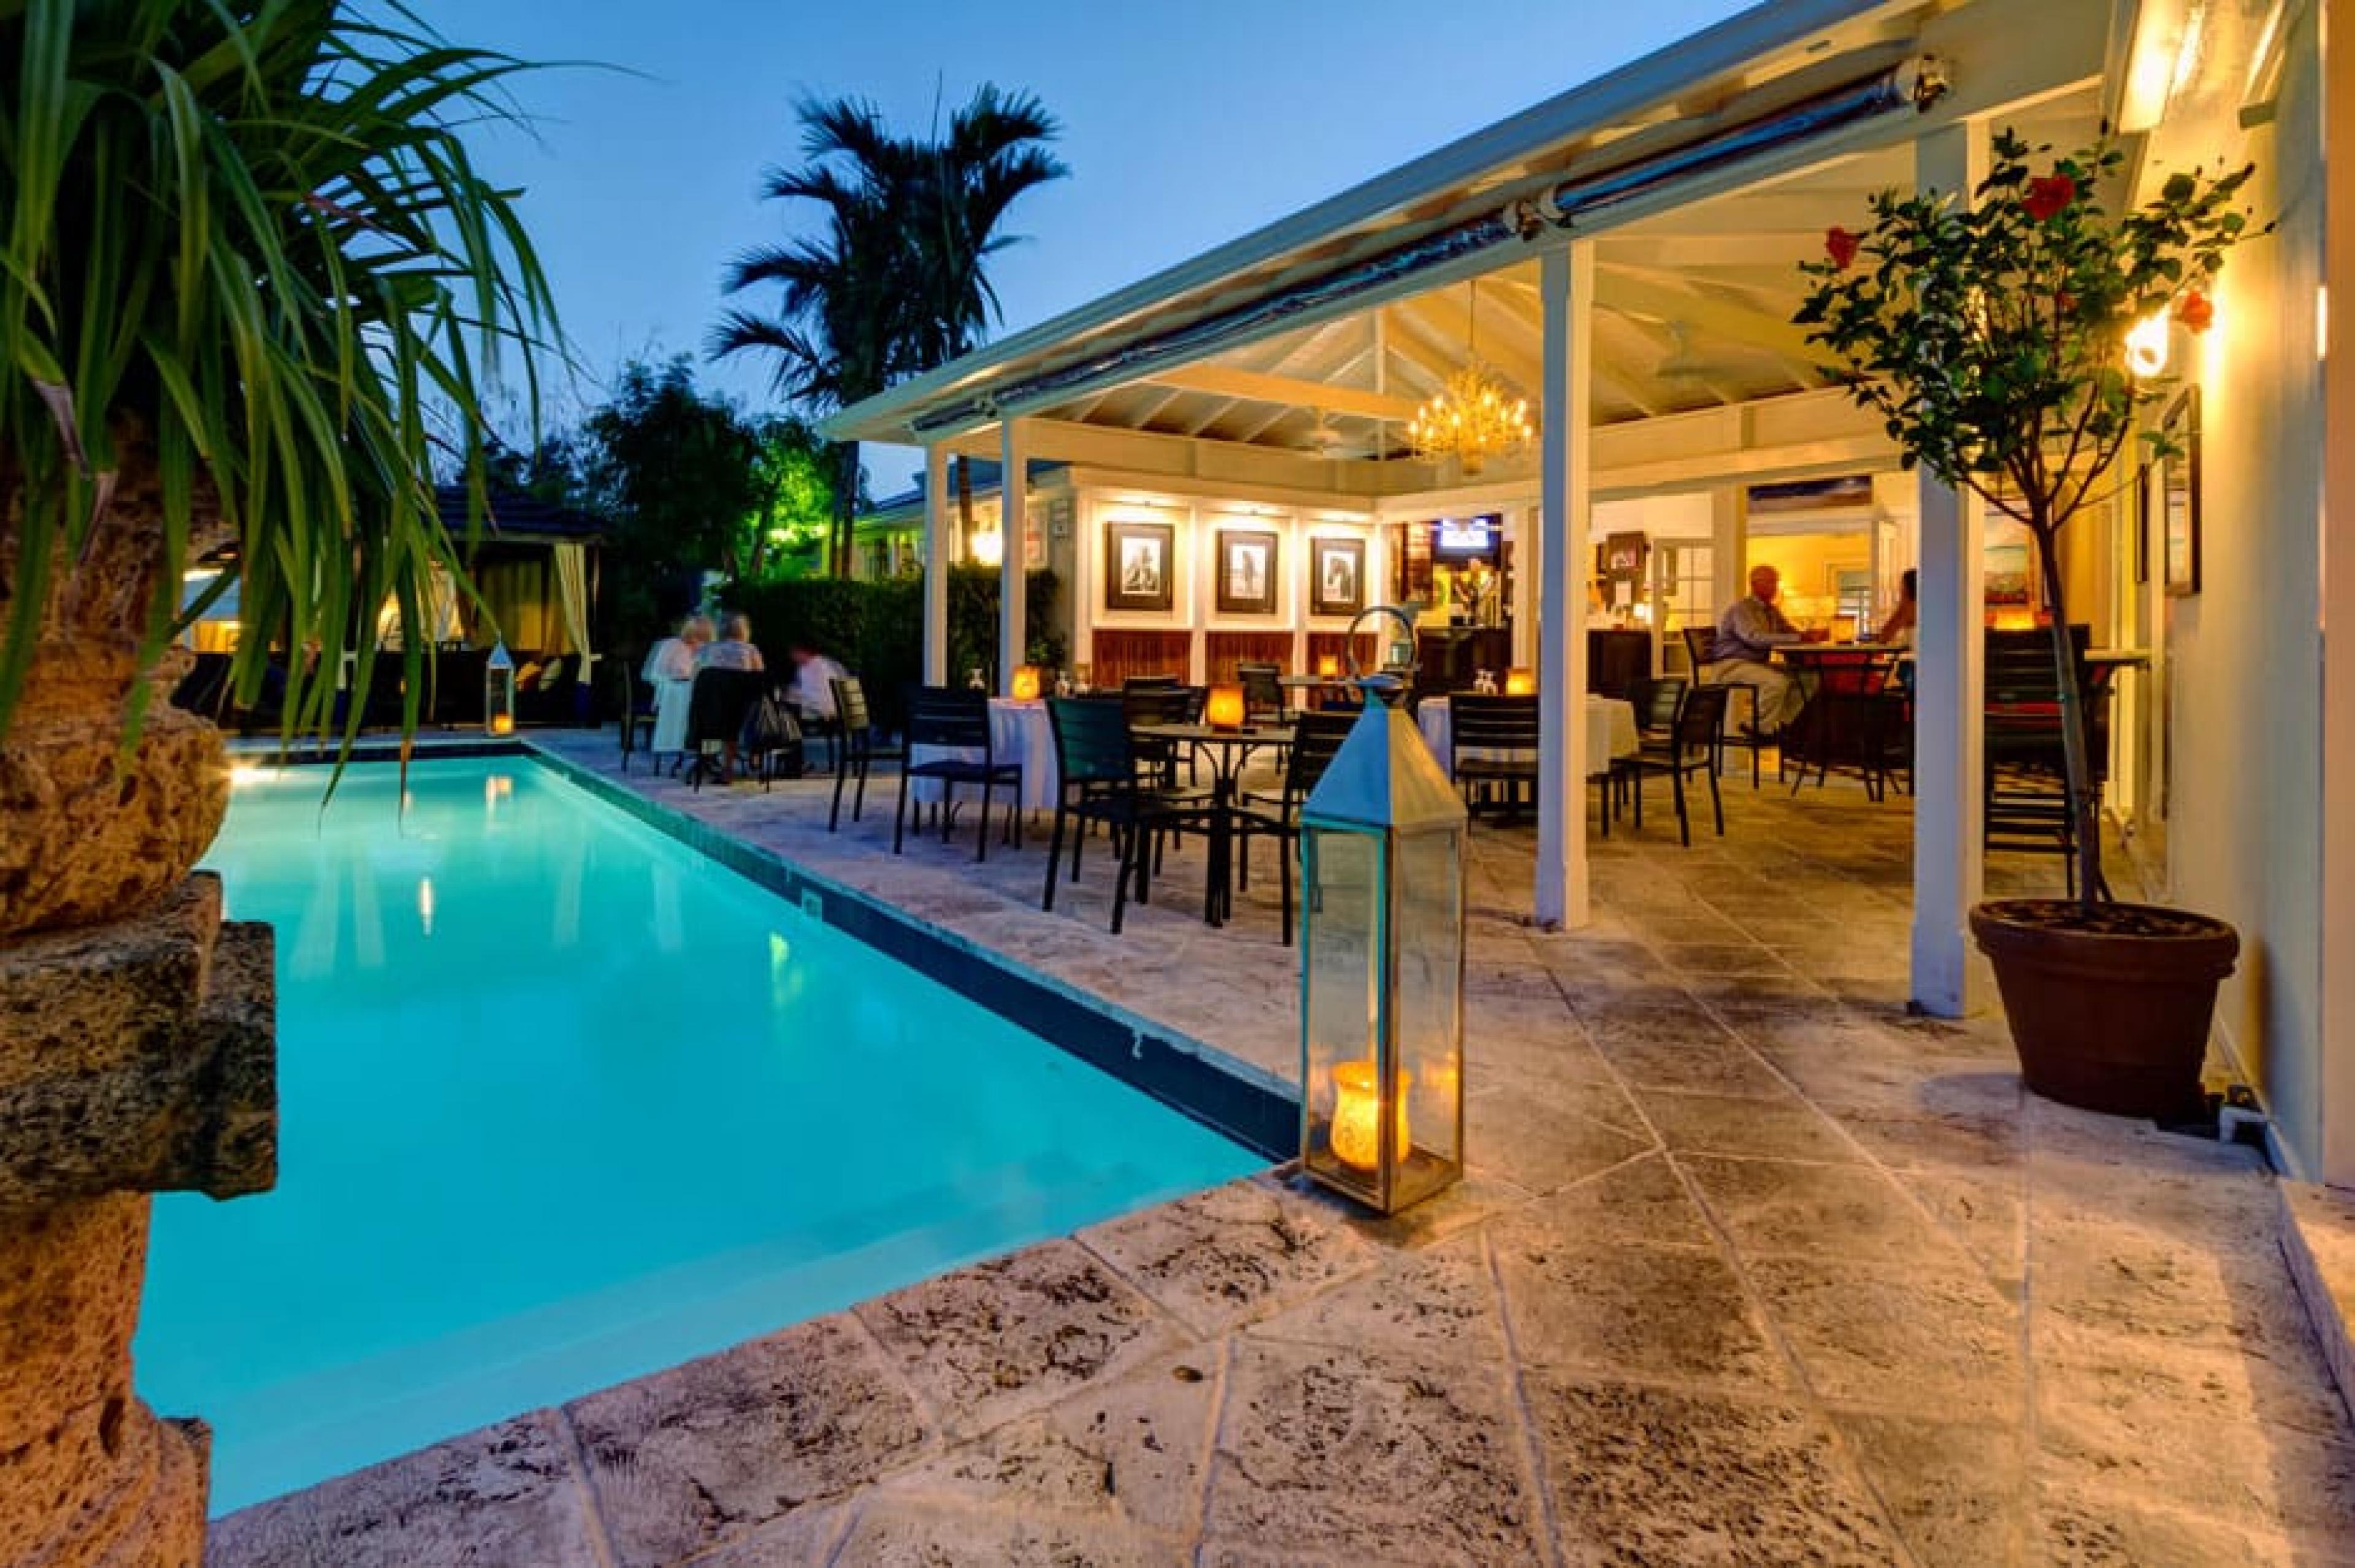 Pool Lounge at Rock House, Harbour Island, Caribbean - credit Perry Jospeh